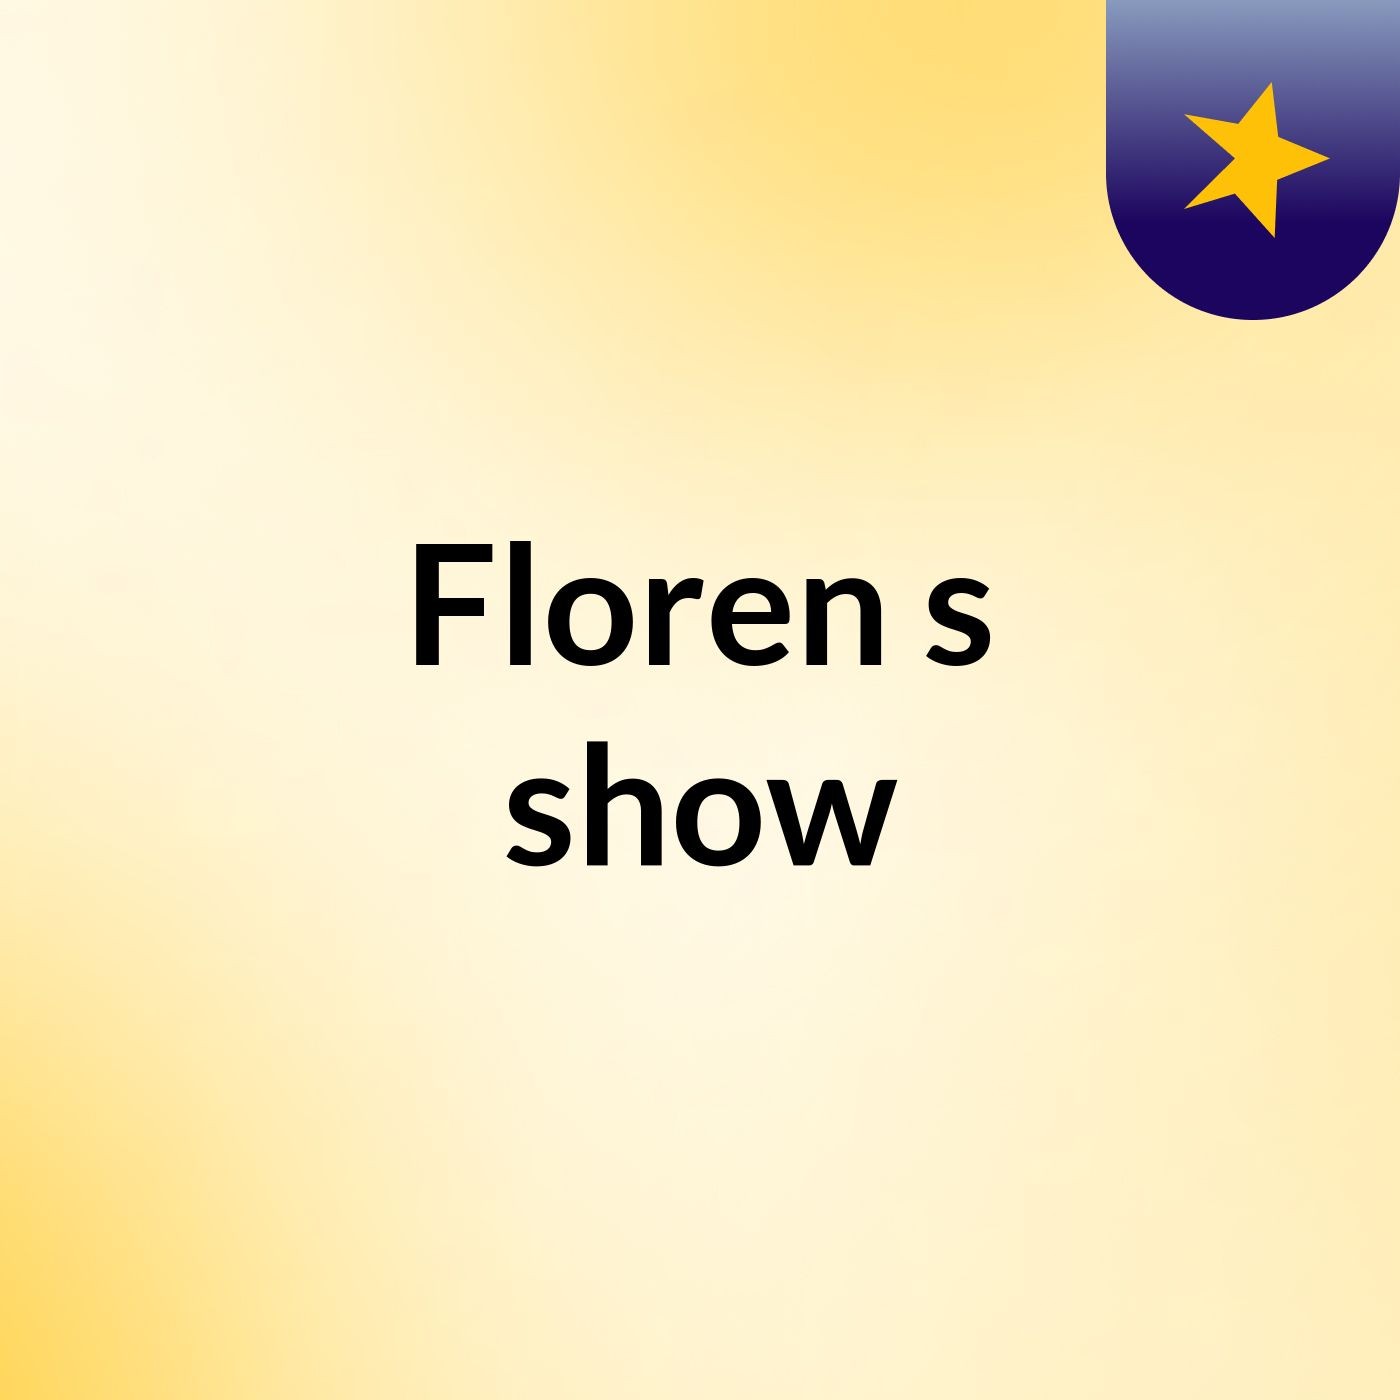 Floren's show